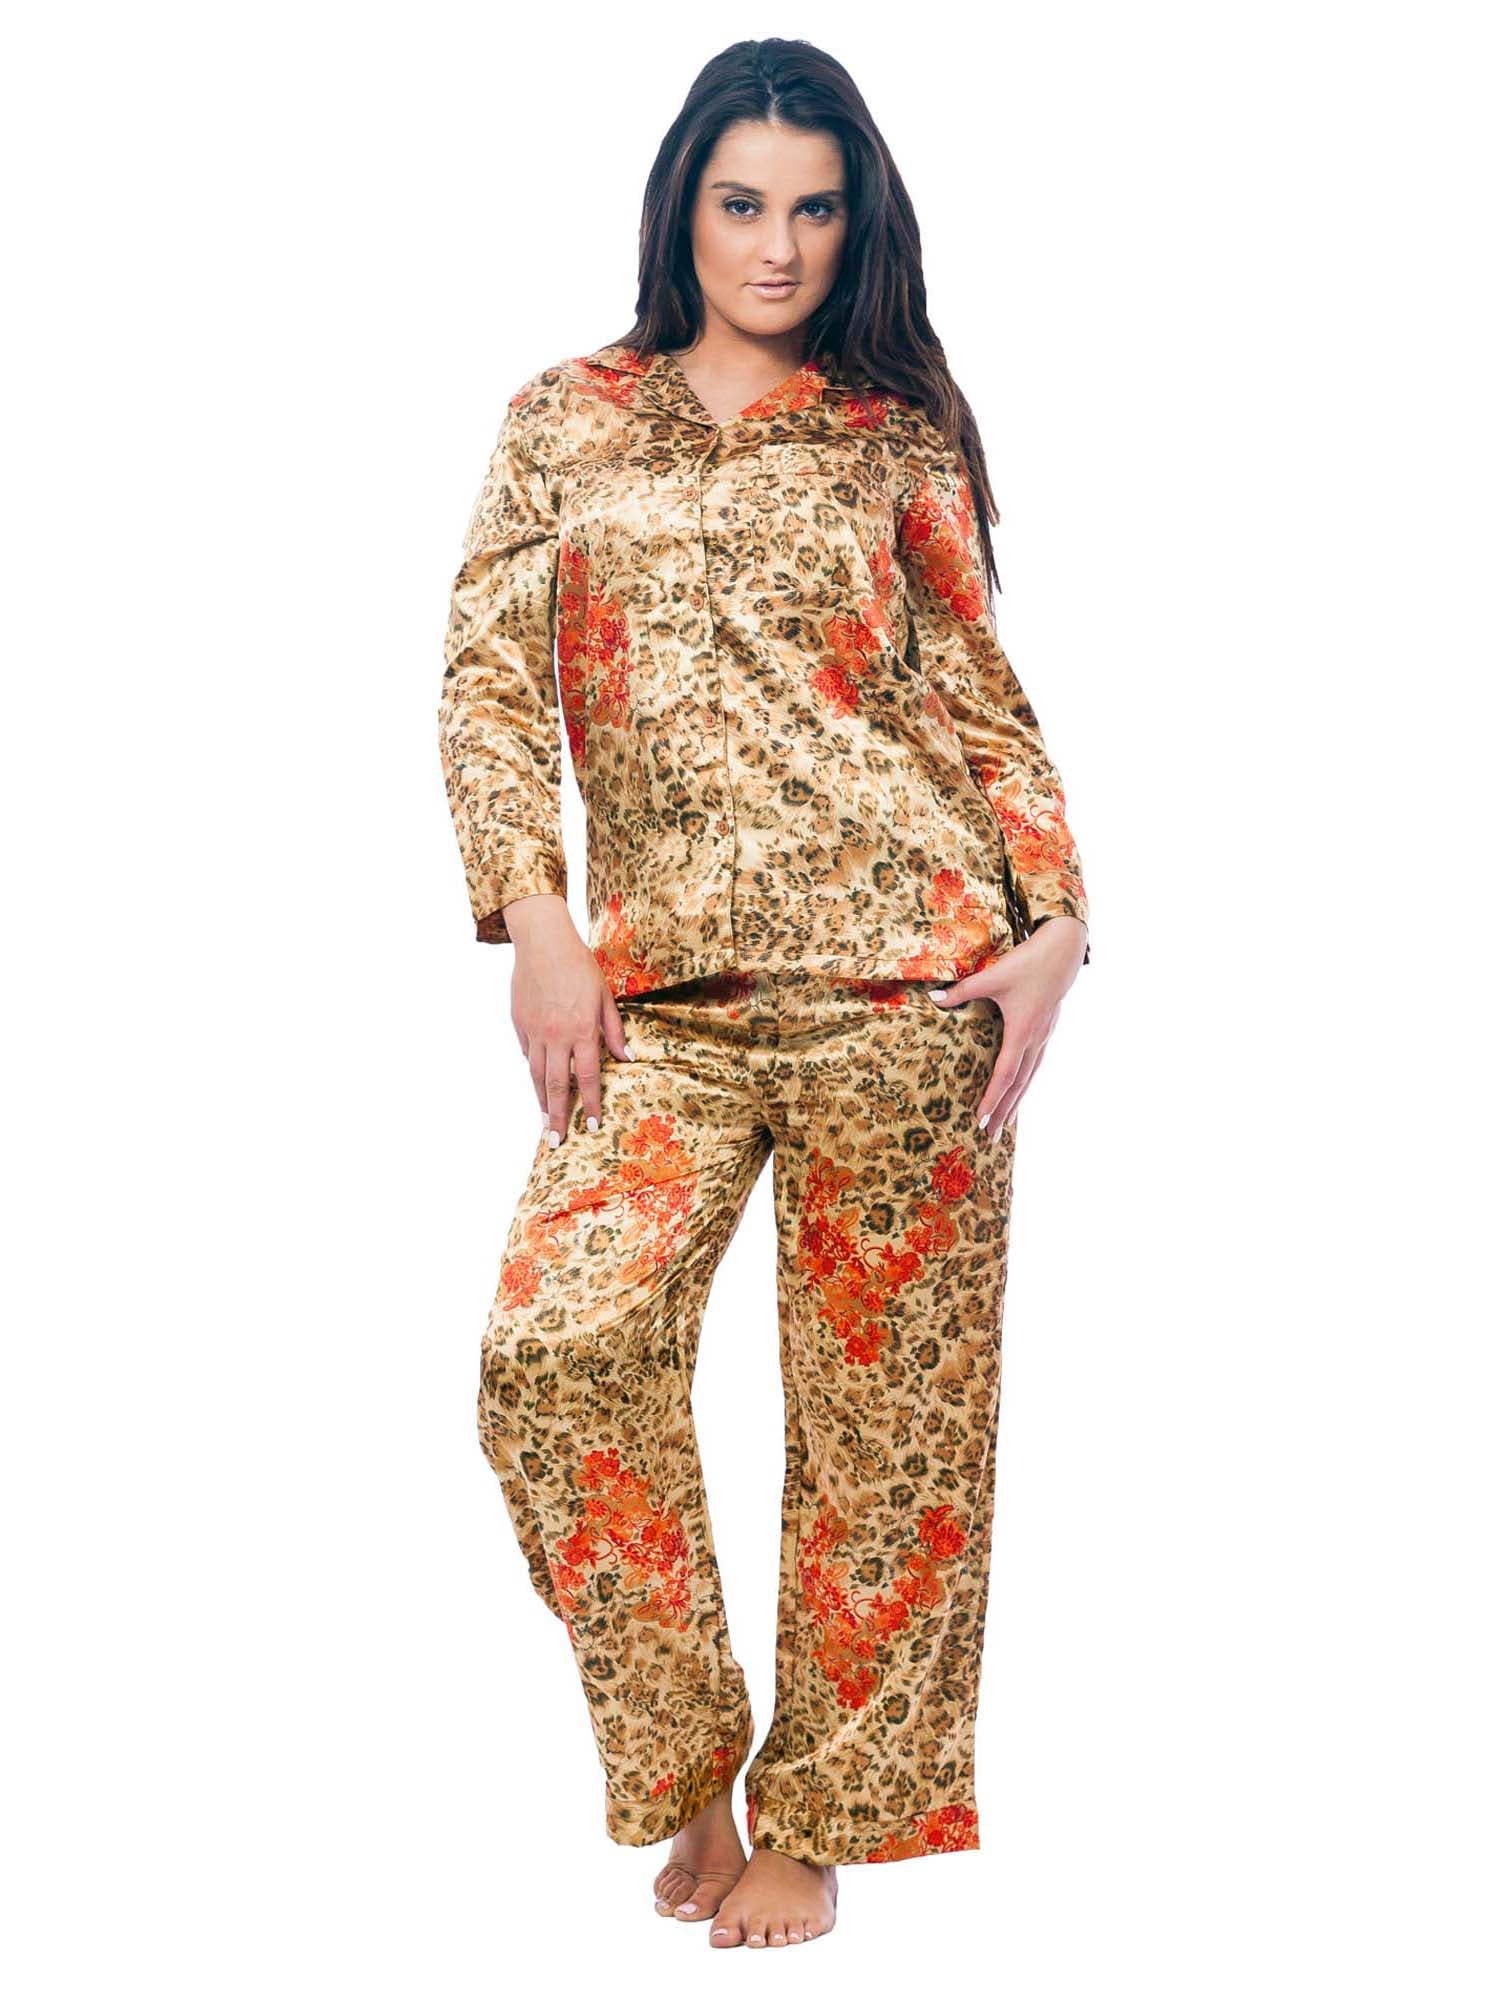 Women's Pajama Set / Pajamas / Pyjamas / PJs, Satin, Golden Cheetah Animal Print